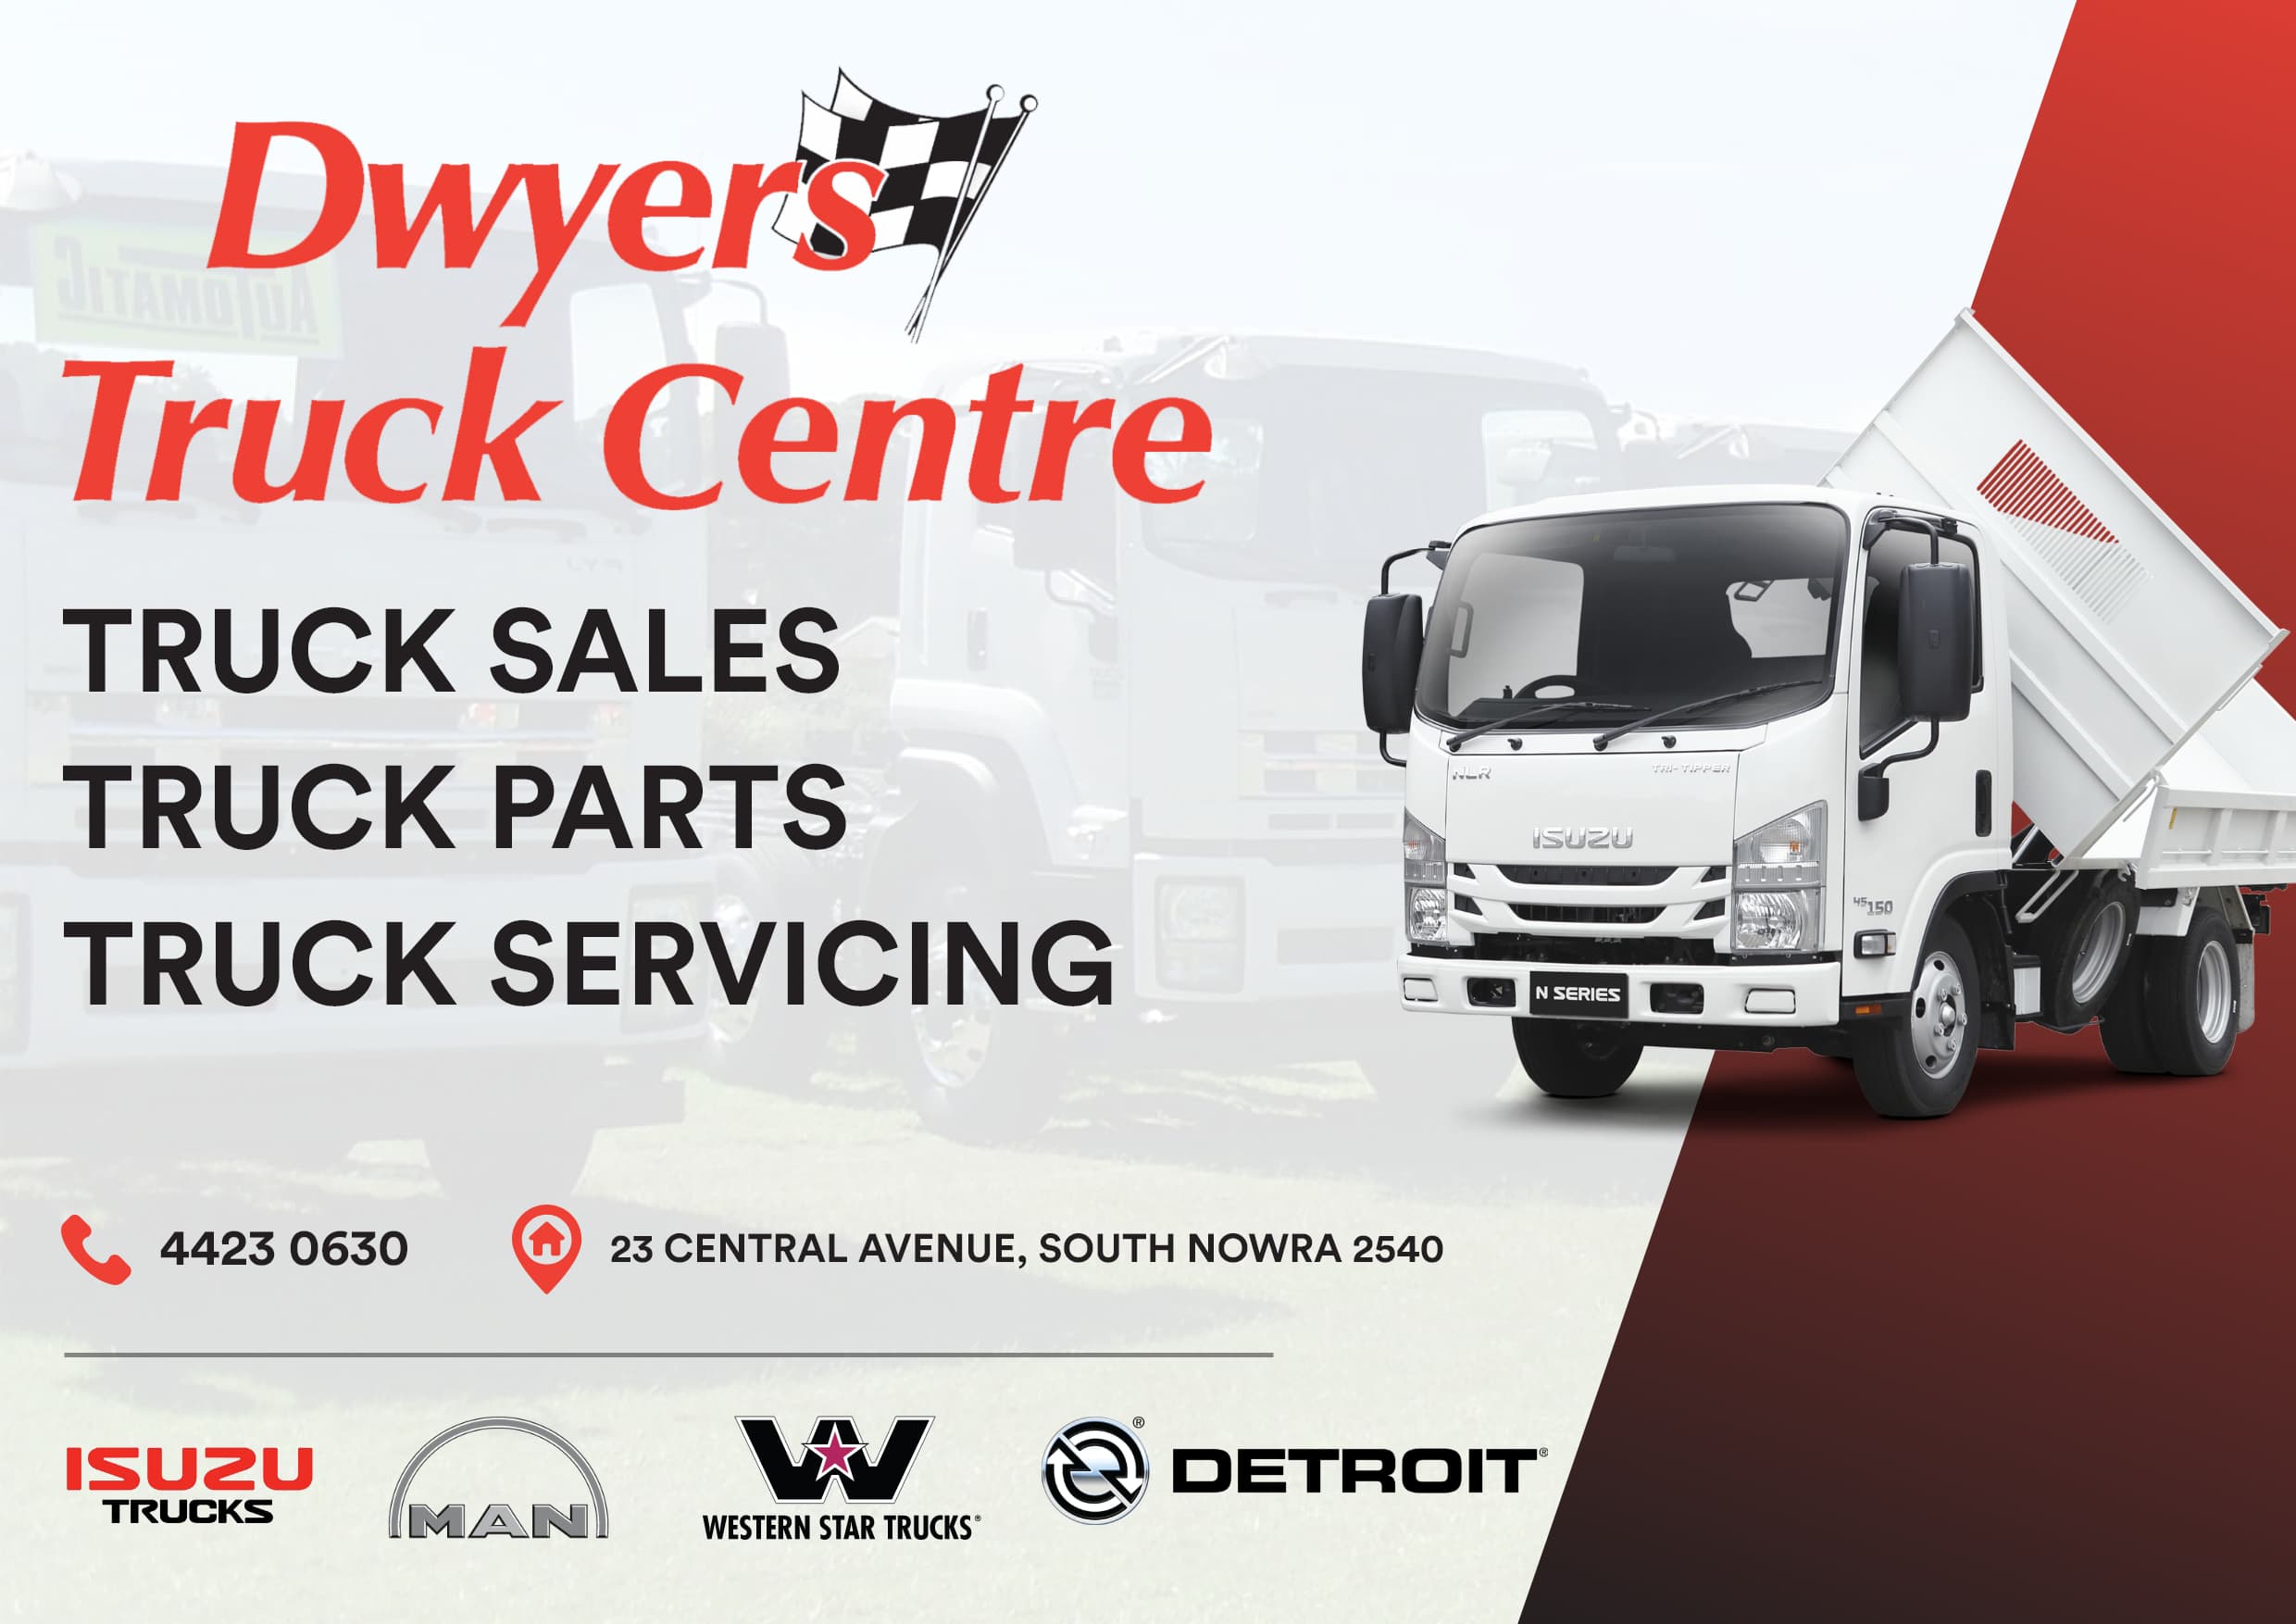 dwyers truck centre